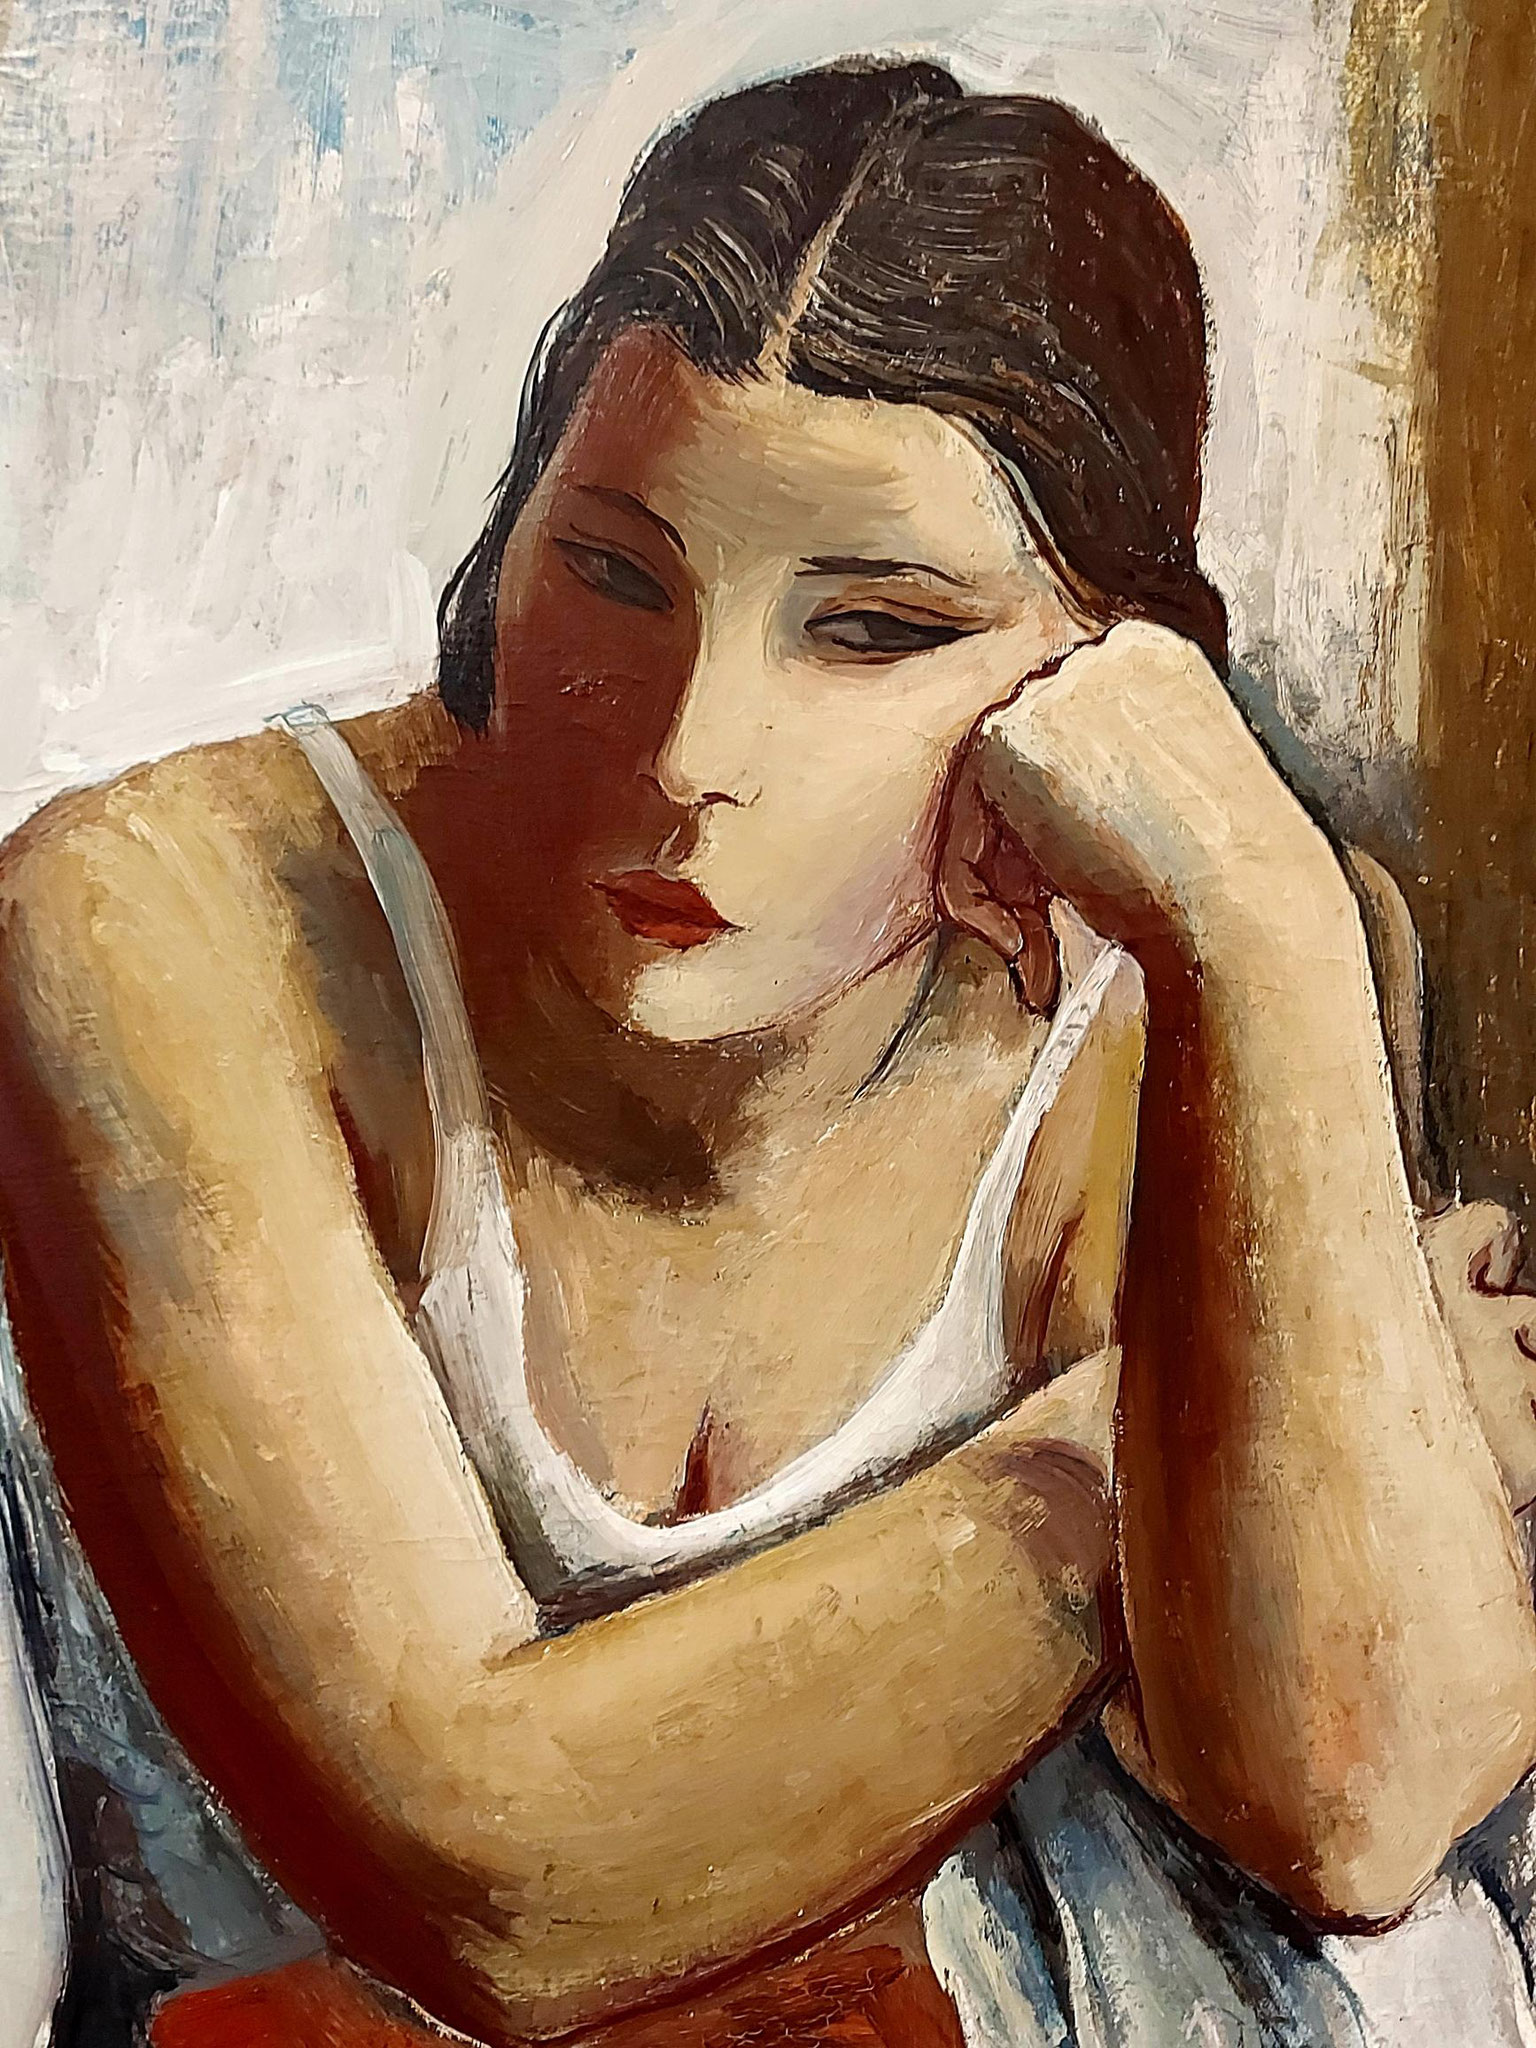 Johannes Beutner (1890 - 1960): "Junge Frau", 1931